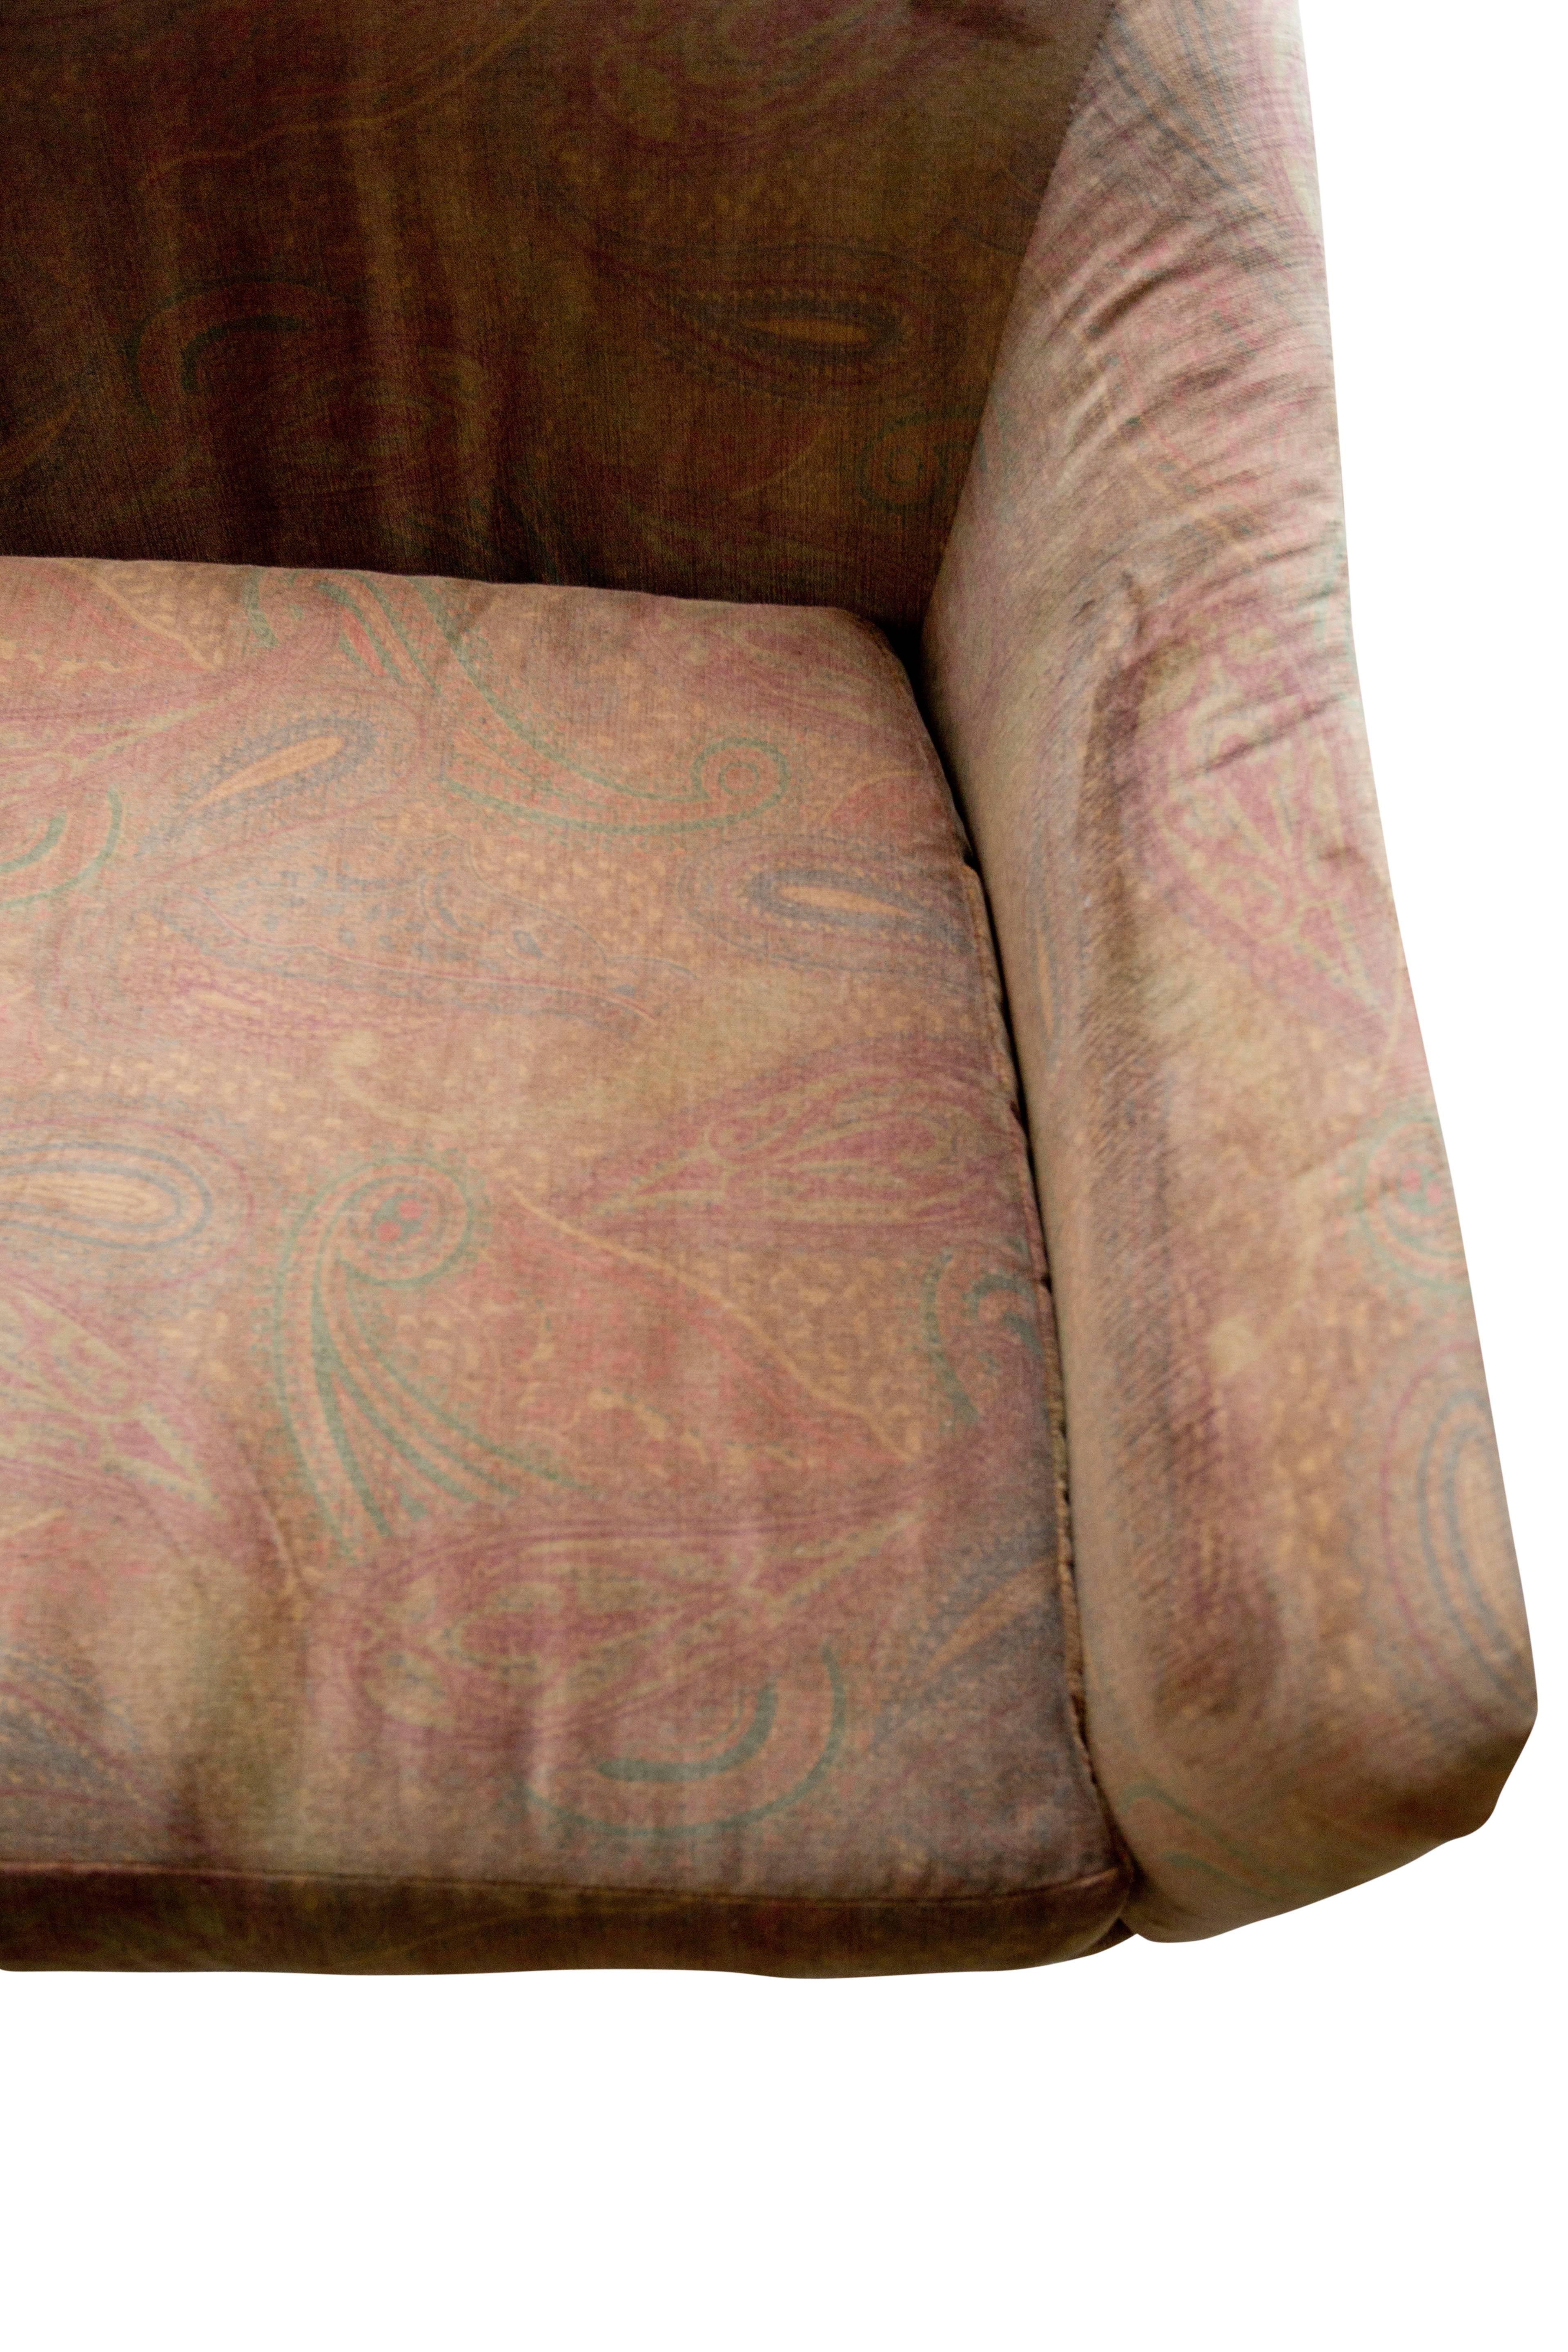 European Carl Malmsten Style Sofa/Settee